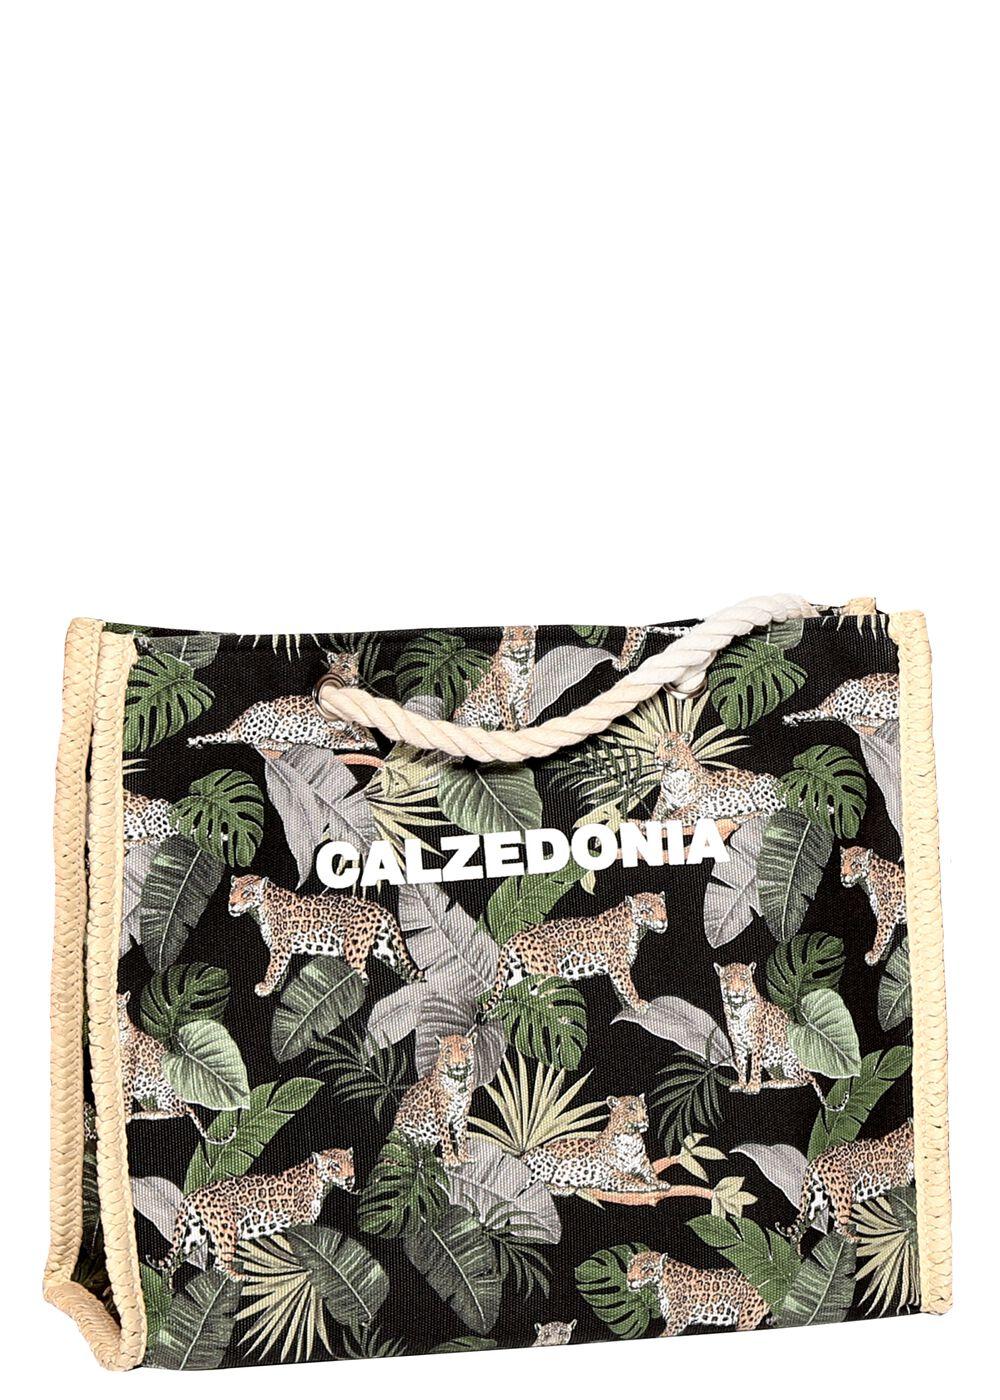 calzedonia beach bag